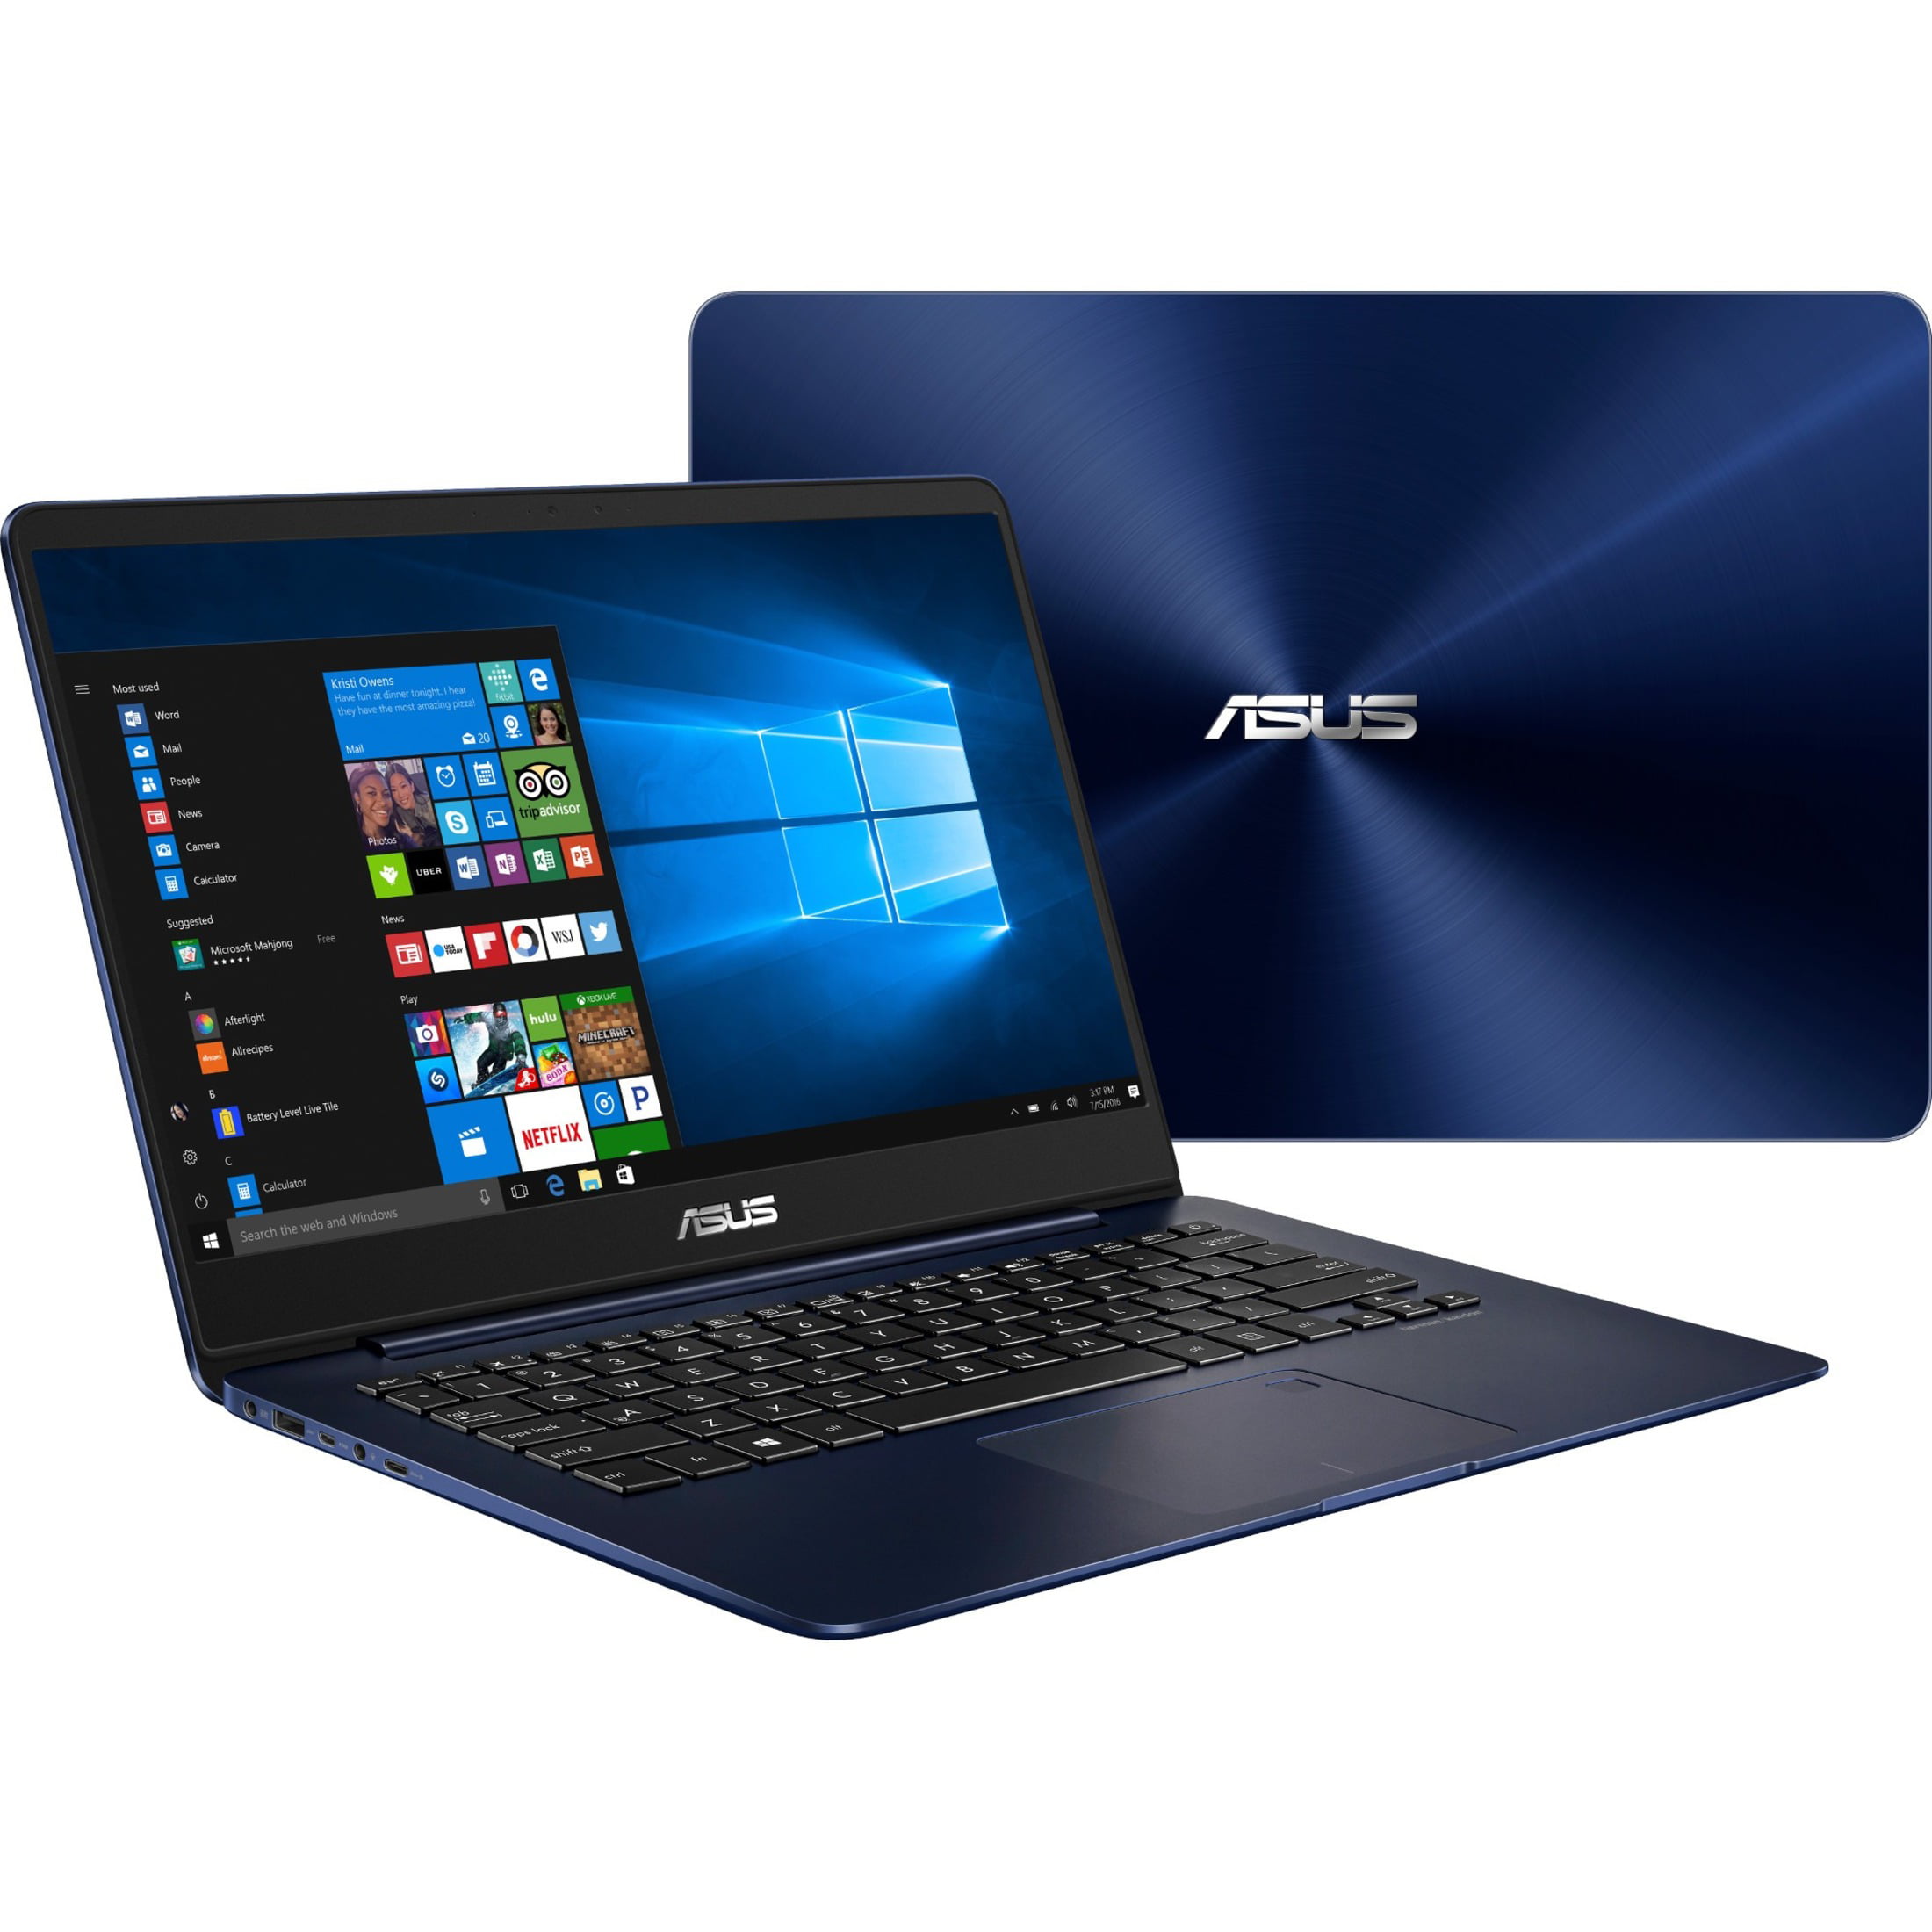 Asus Zenbook 14 Full Hd Laptop Intel Core I7 I7 8550u 8gb Ram 256gb